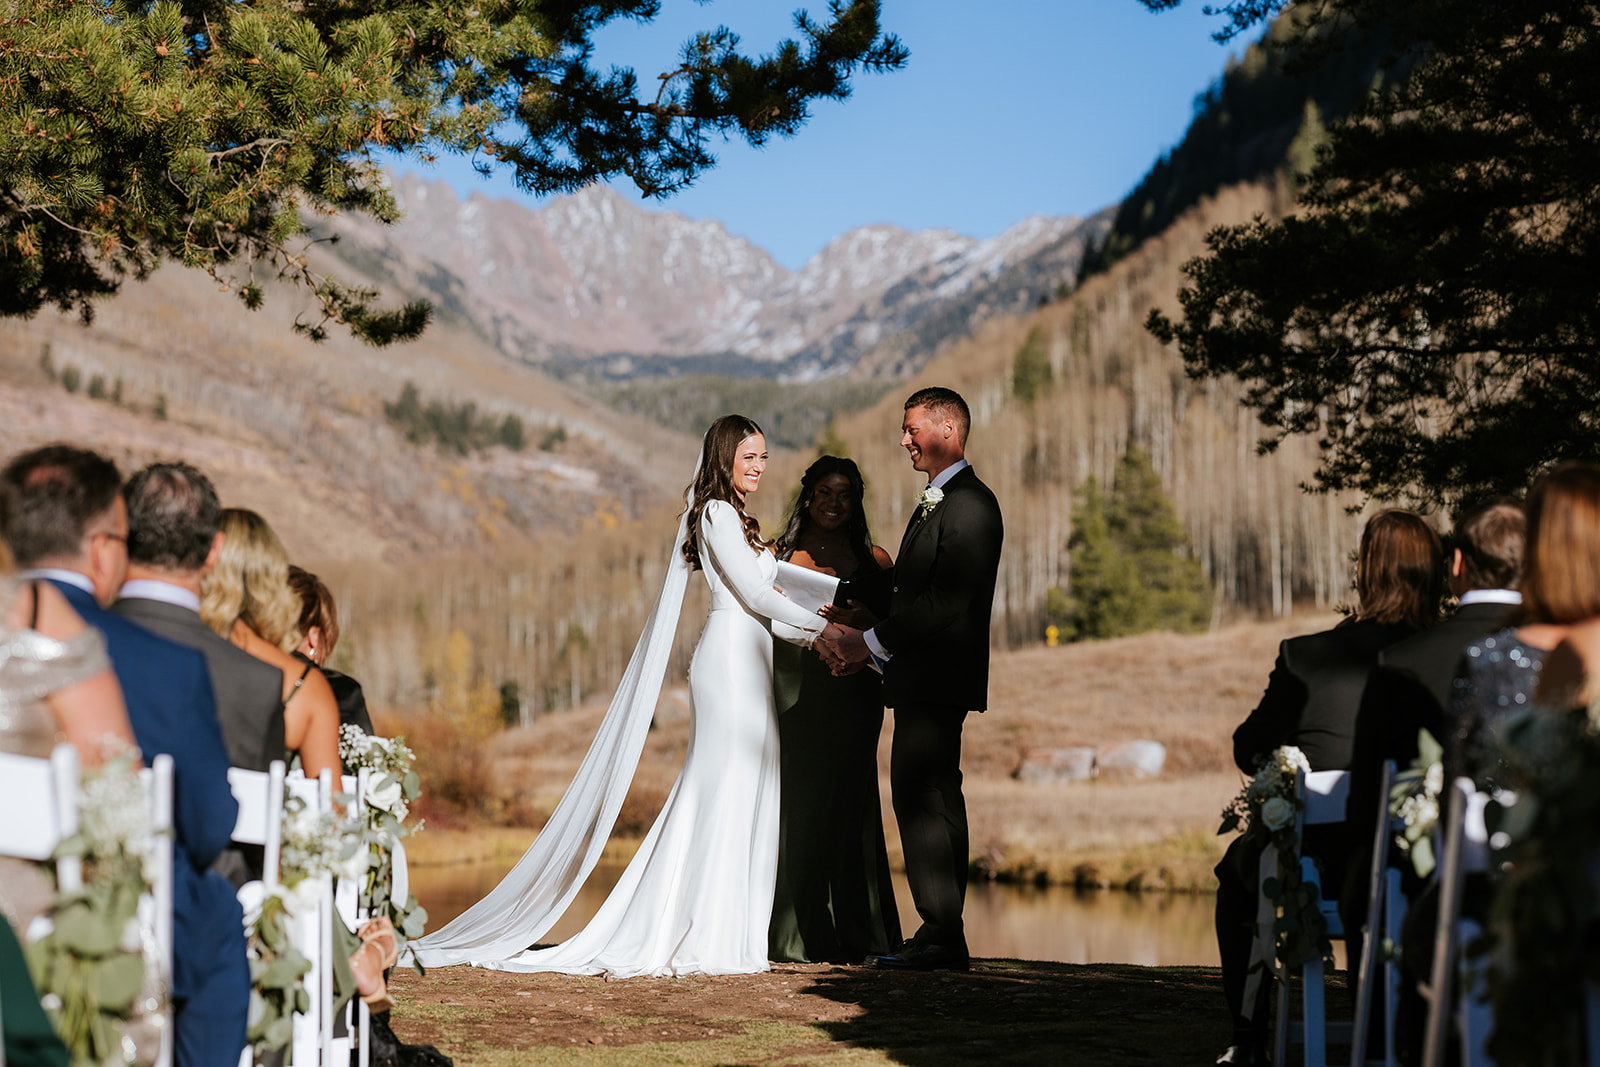 Colorado wedding ceremony on wedding island at Vail Golf Club and Nordic Center.